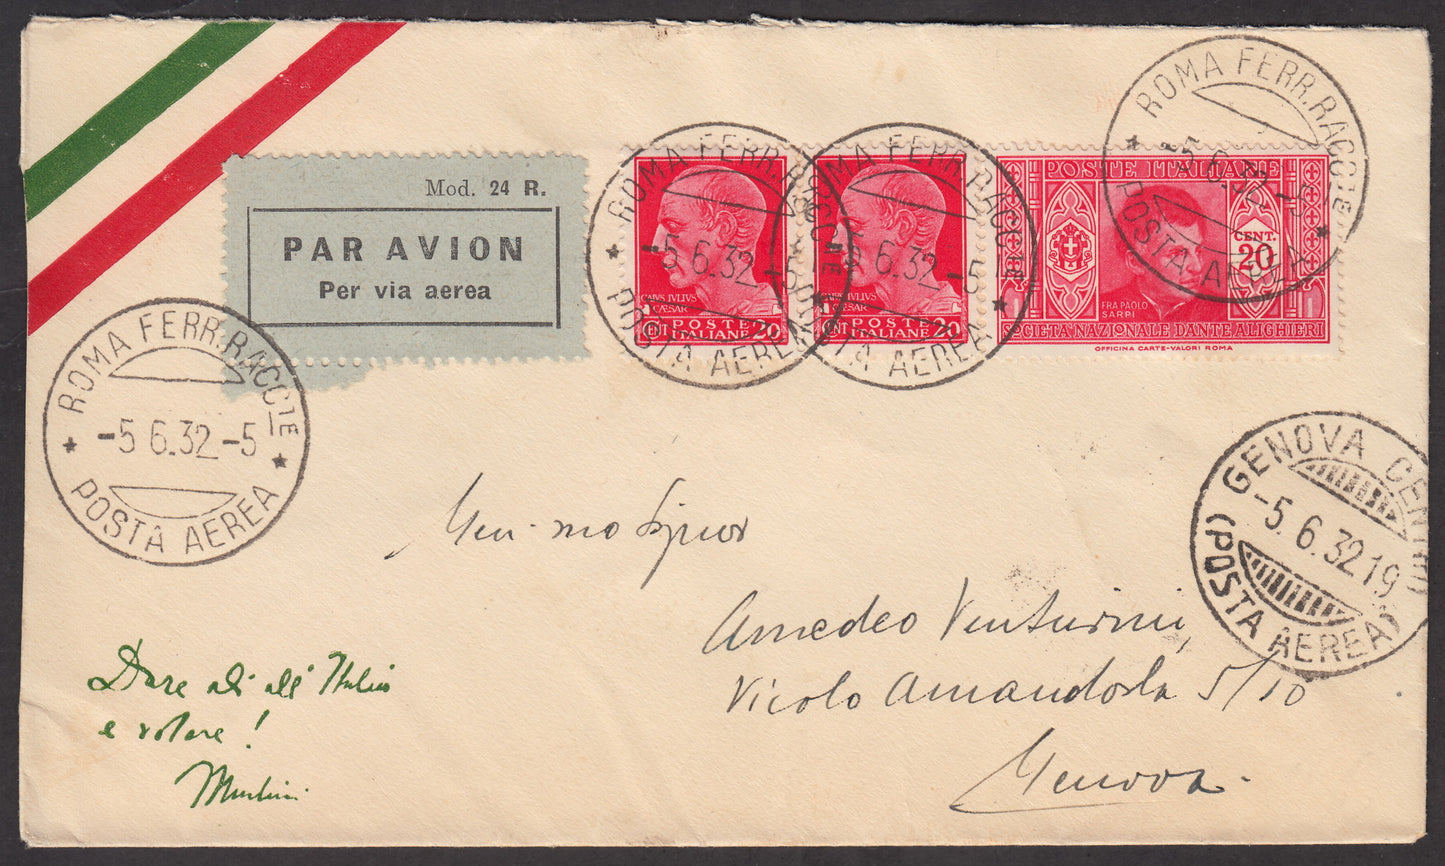 1932 - Airmail, Rome-Genoa 5/6/32 with Imperiale c. 20 carmine two copies + Dante c. 20 carmine, twin values ​​(247+ 305) 